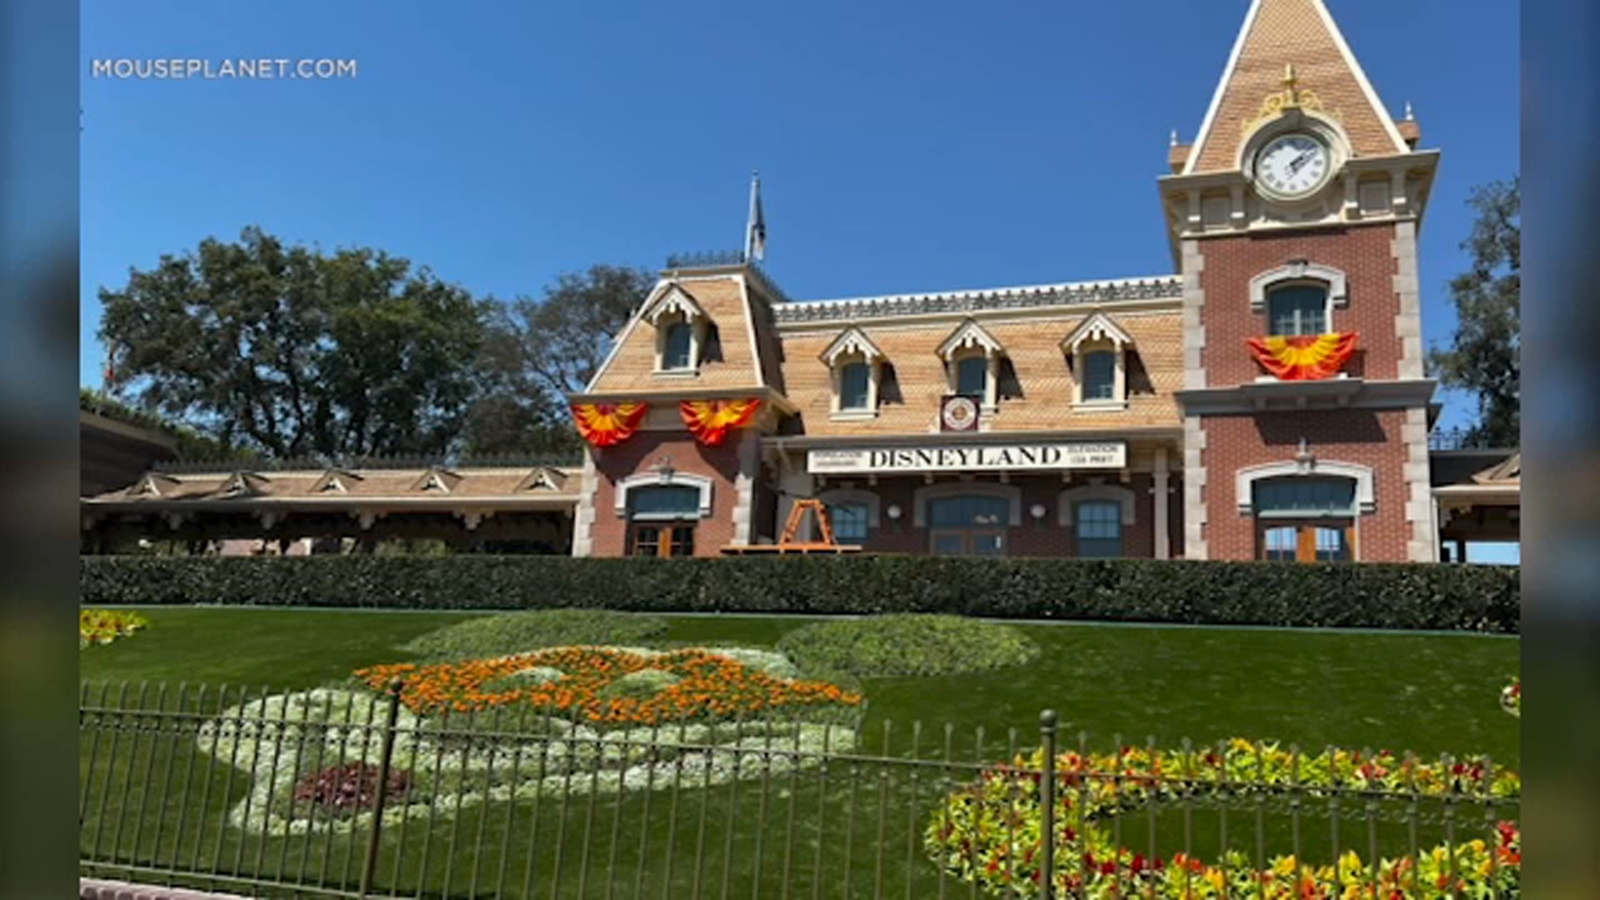 Disneyland unveils more artificial turf around the park, including around Mickey floral planter